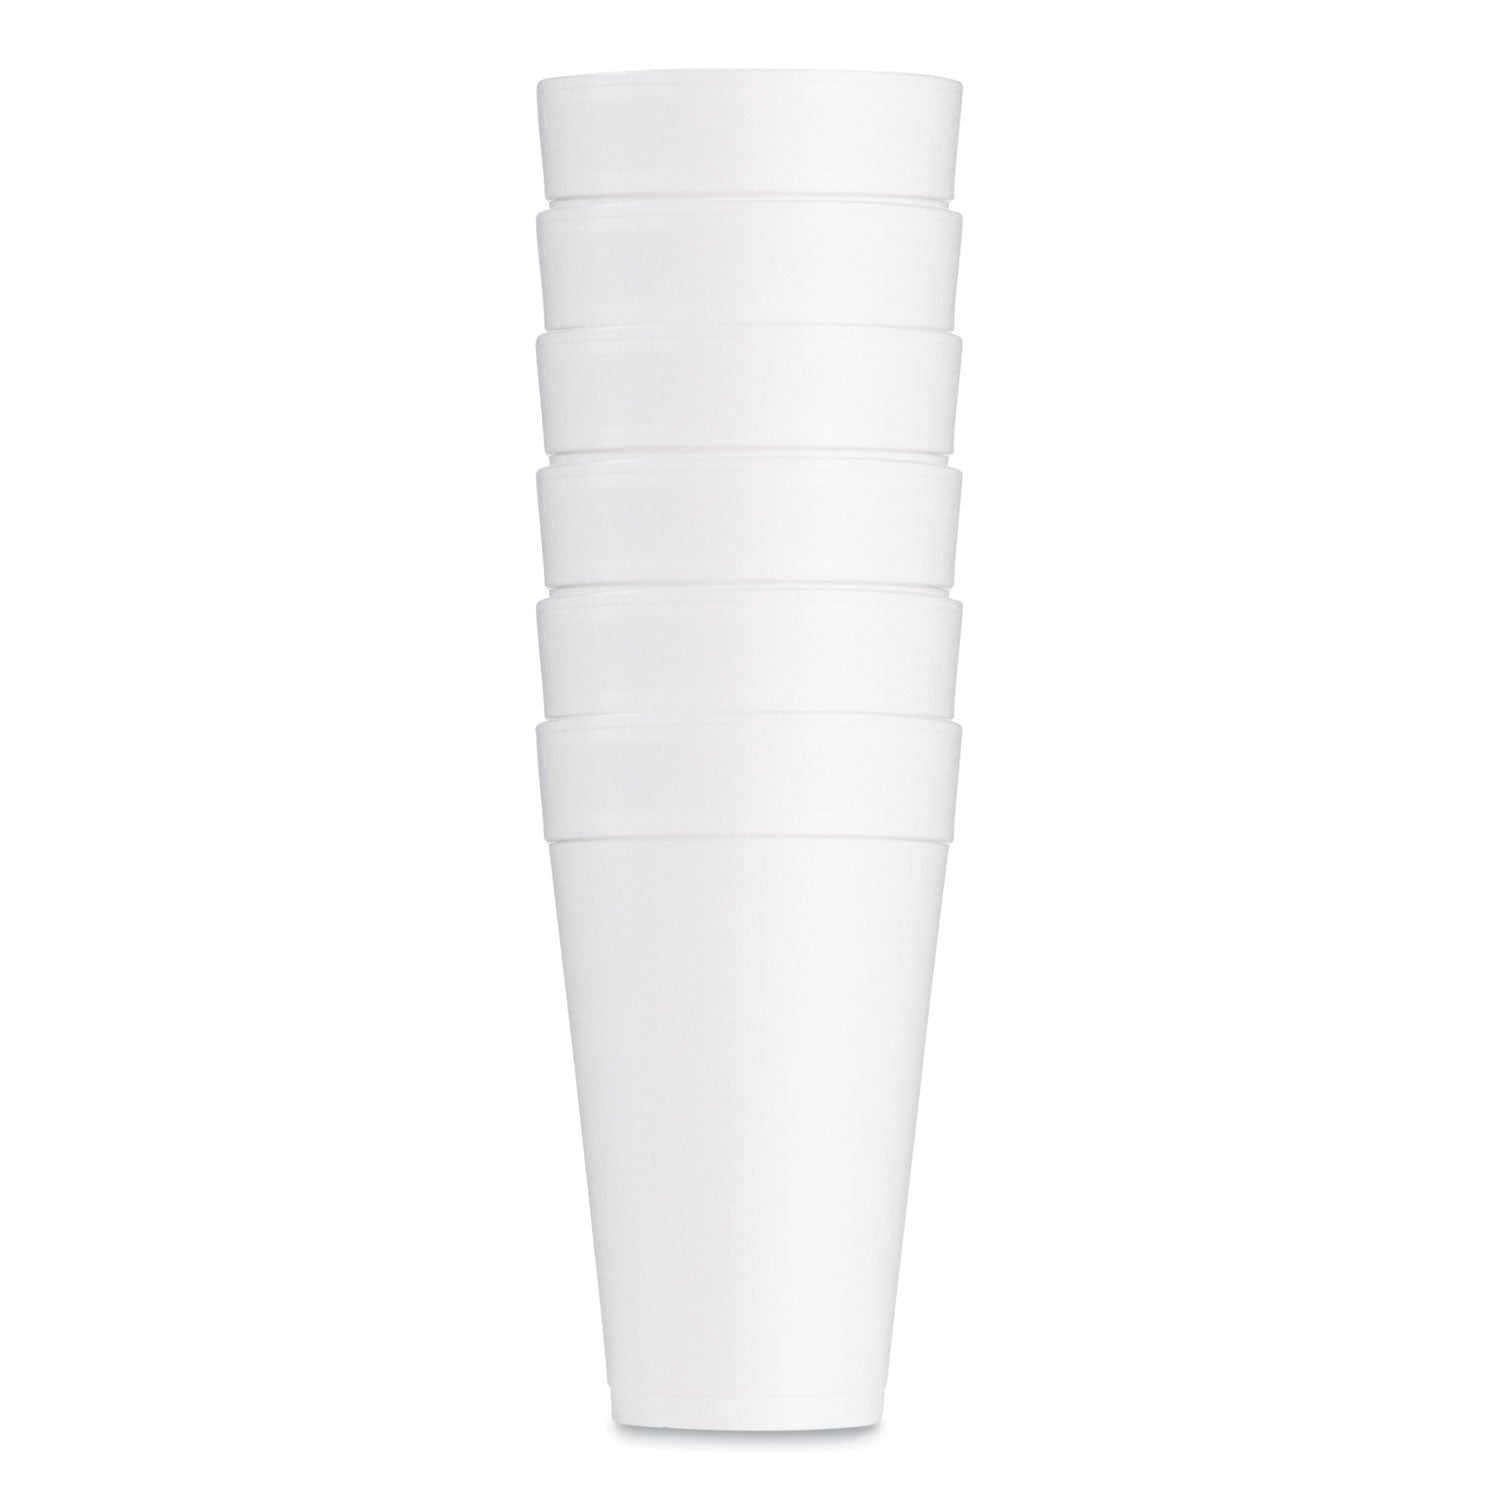 Foam Drink Cups, 32 oz, White, 25/Bag, 20 Bags/Carton - 